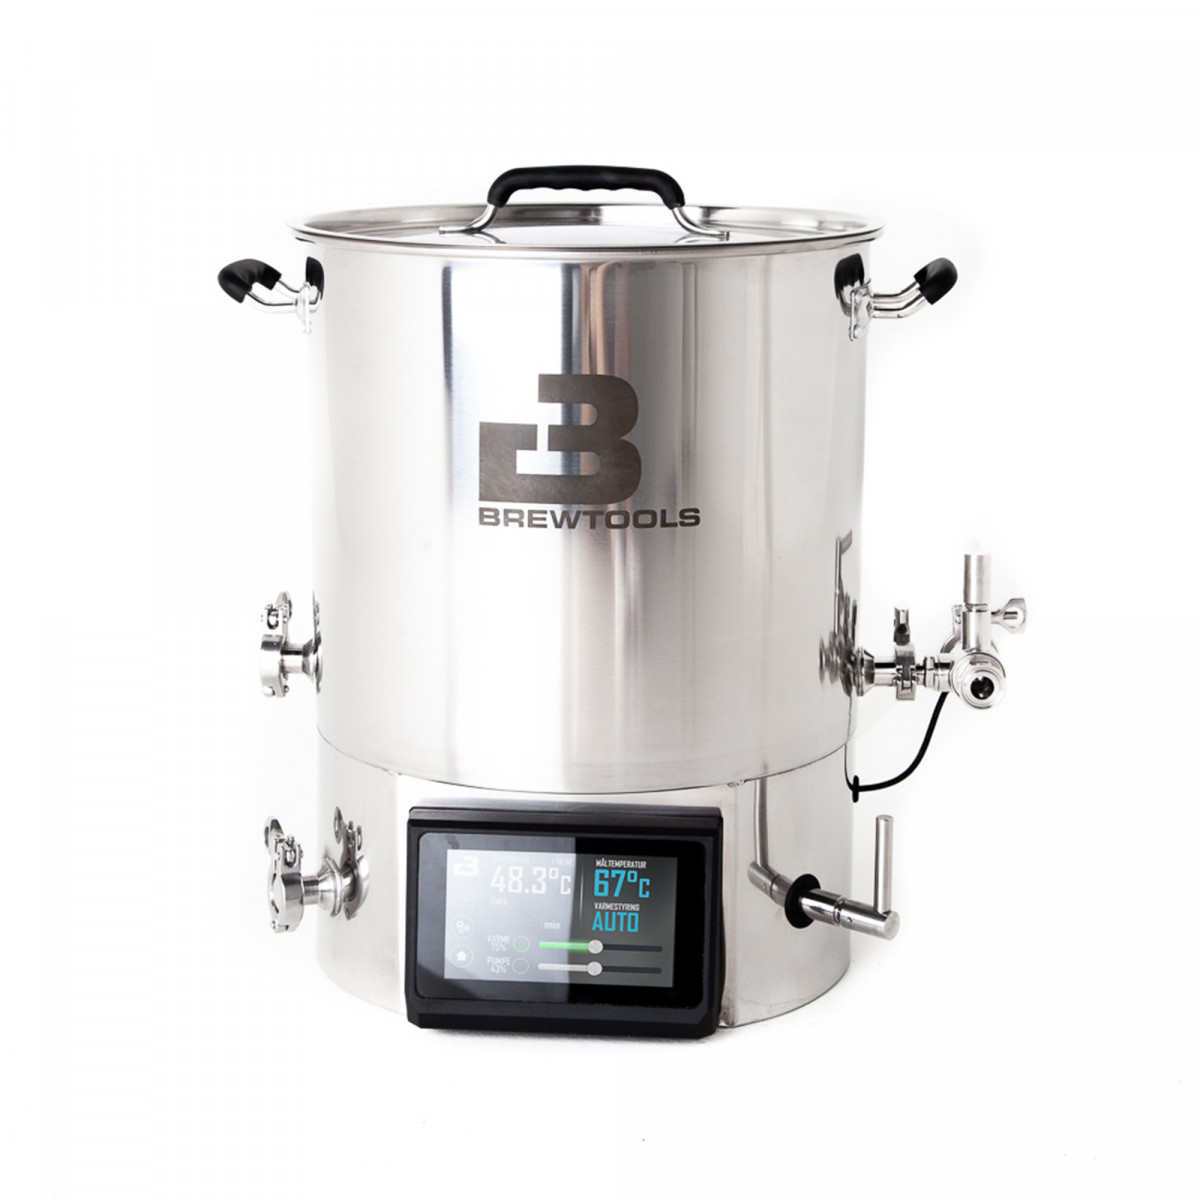 Brewtools brewing system B40pro 